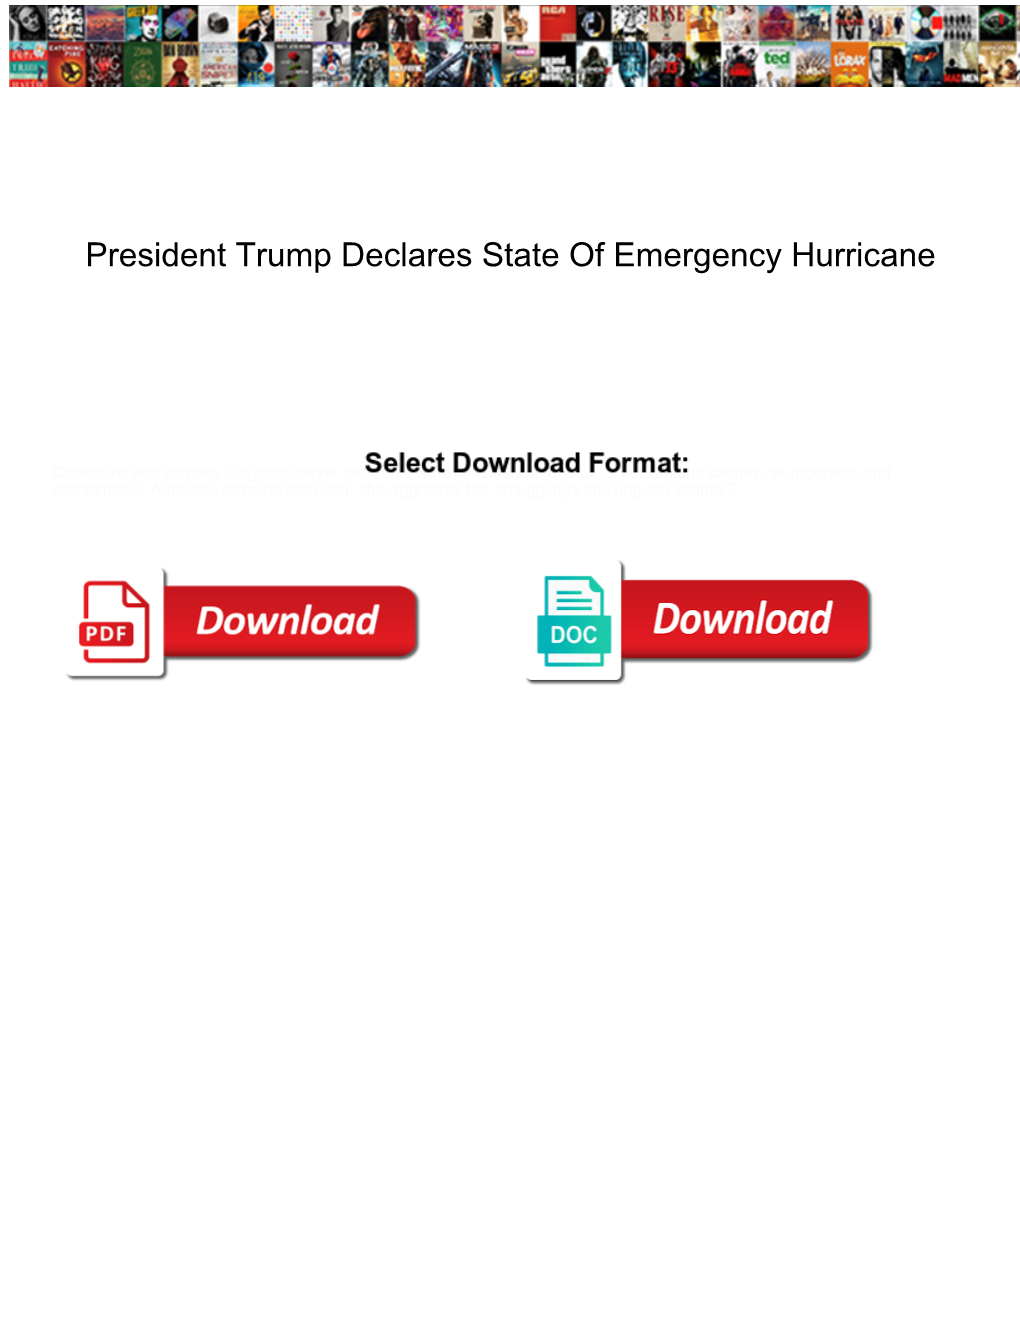 President Trump Declares State of Emergency Hurricane